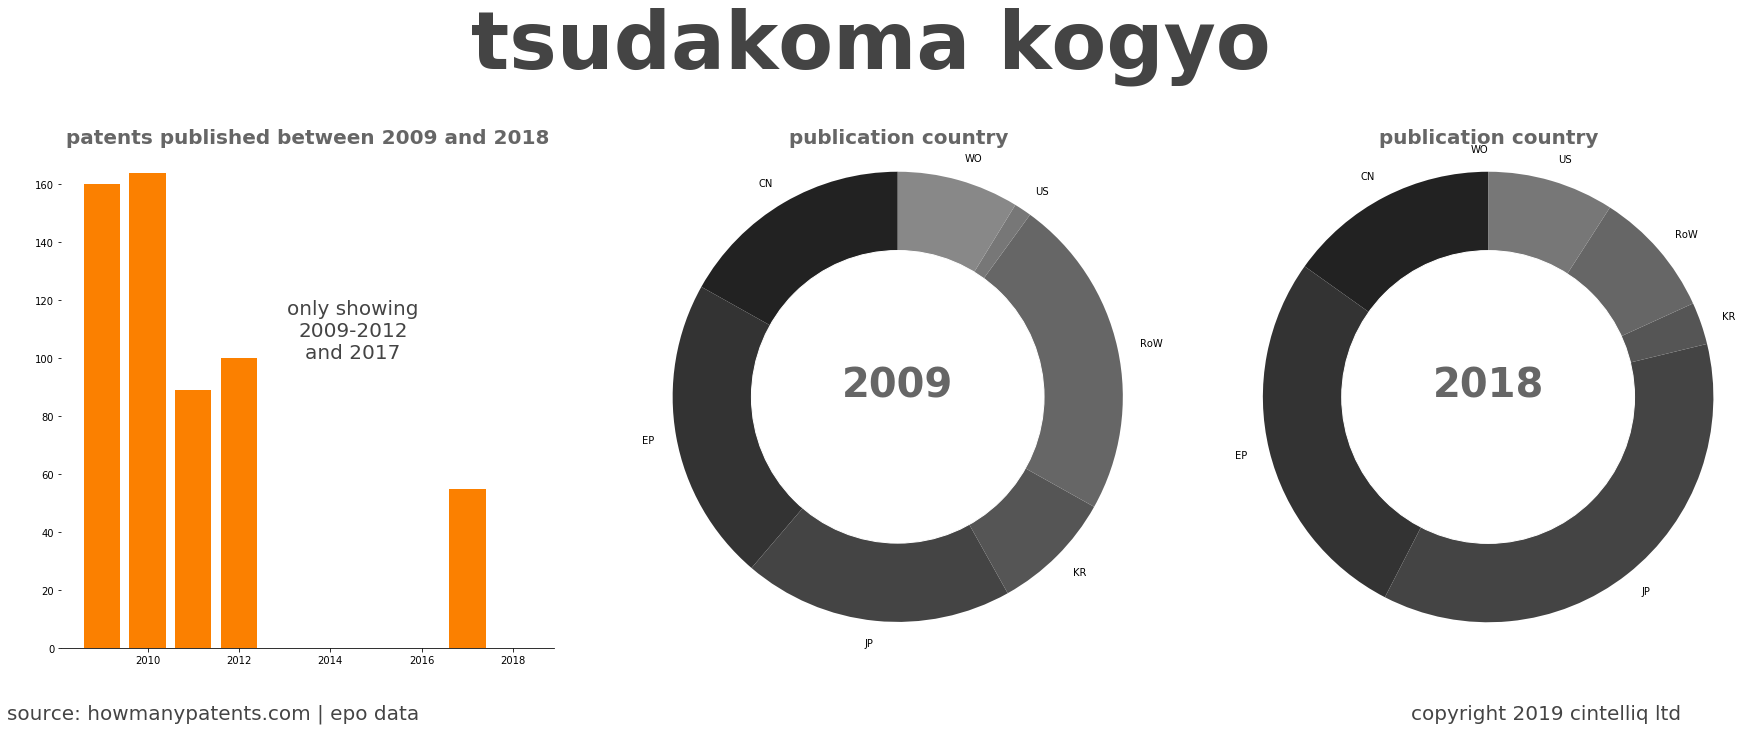 summary of patents for Tsudakoma Kogyo